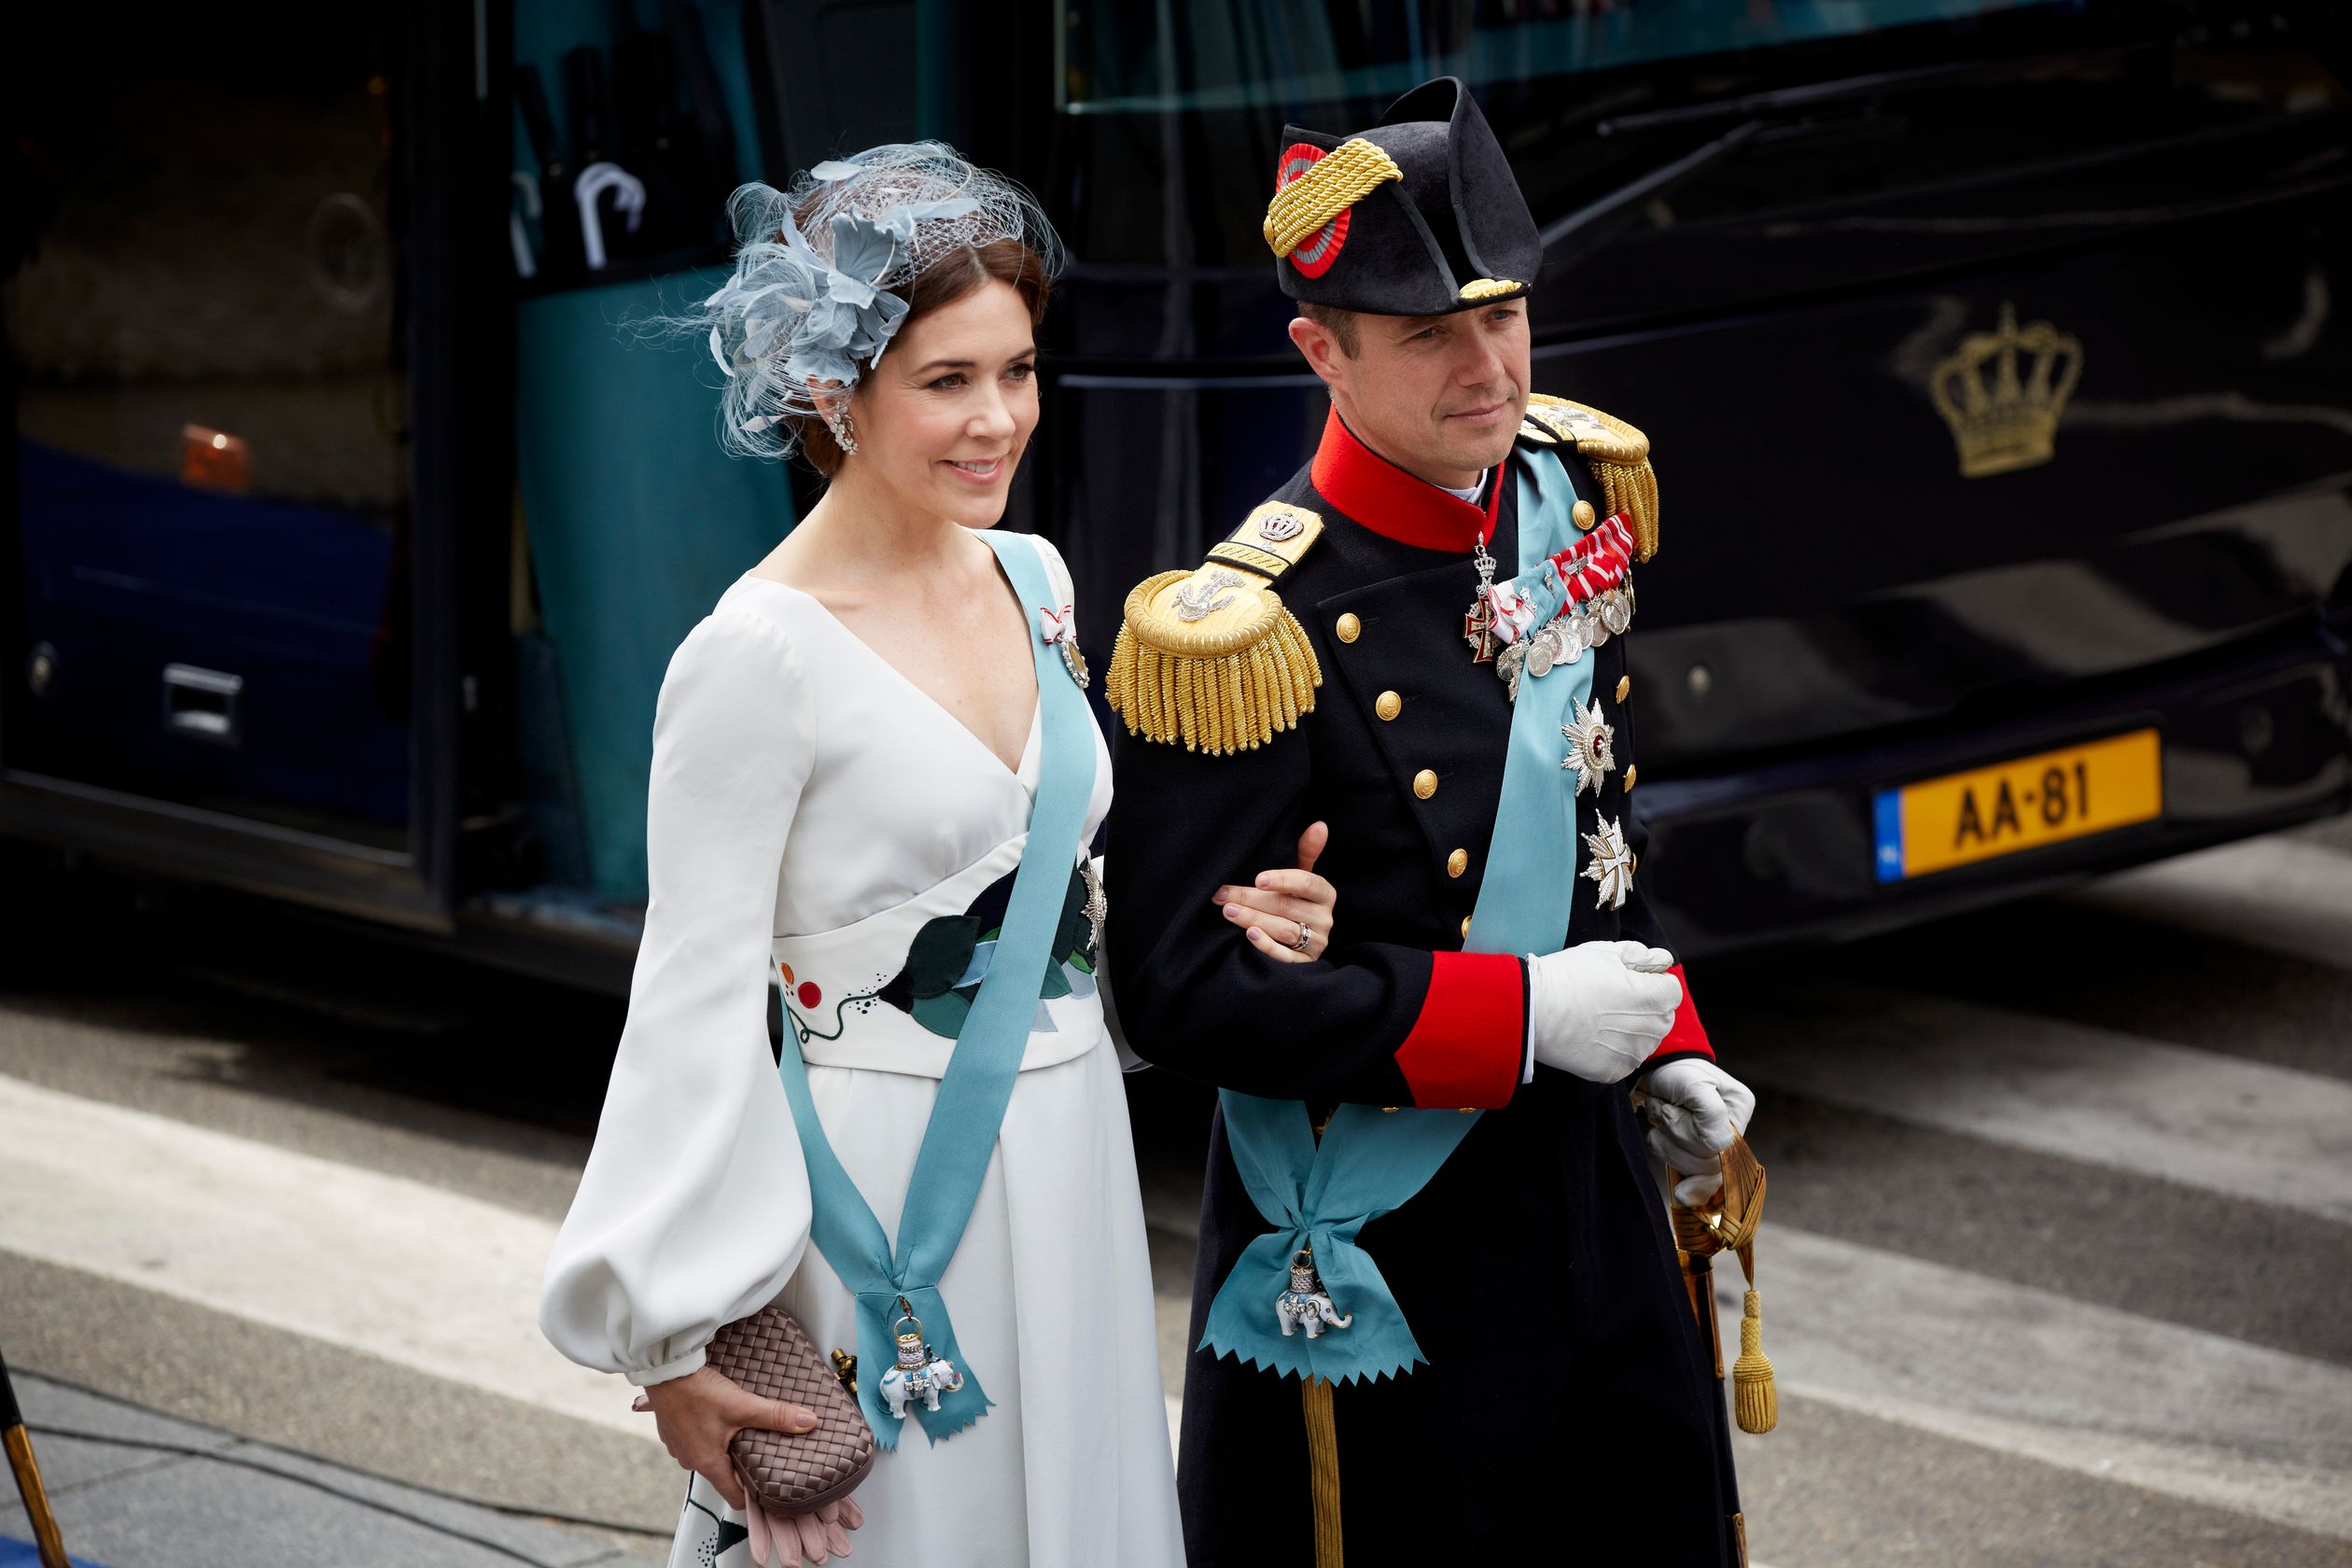 2013 - Kroonprins Frederik en kroonprinses Mary bij de inhuldiging koning Willem-Alexander